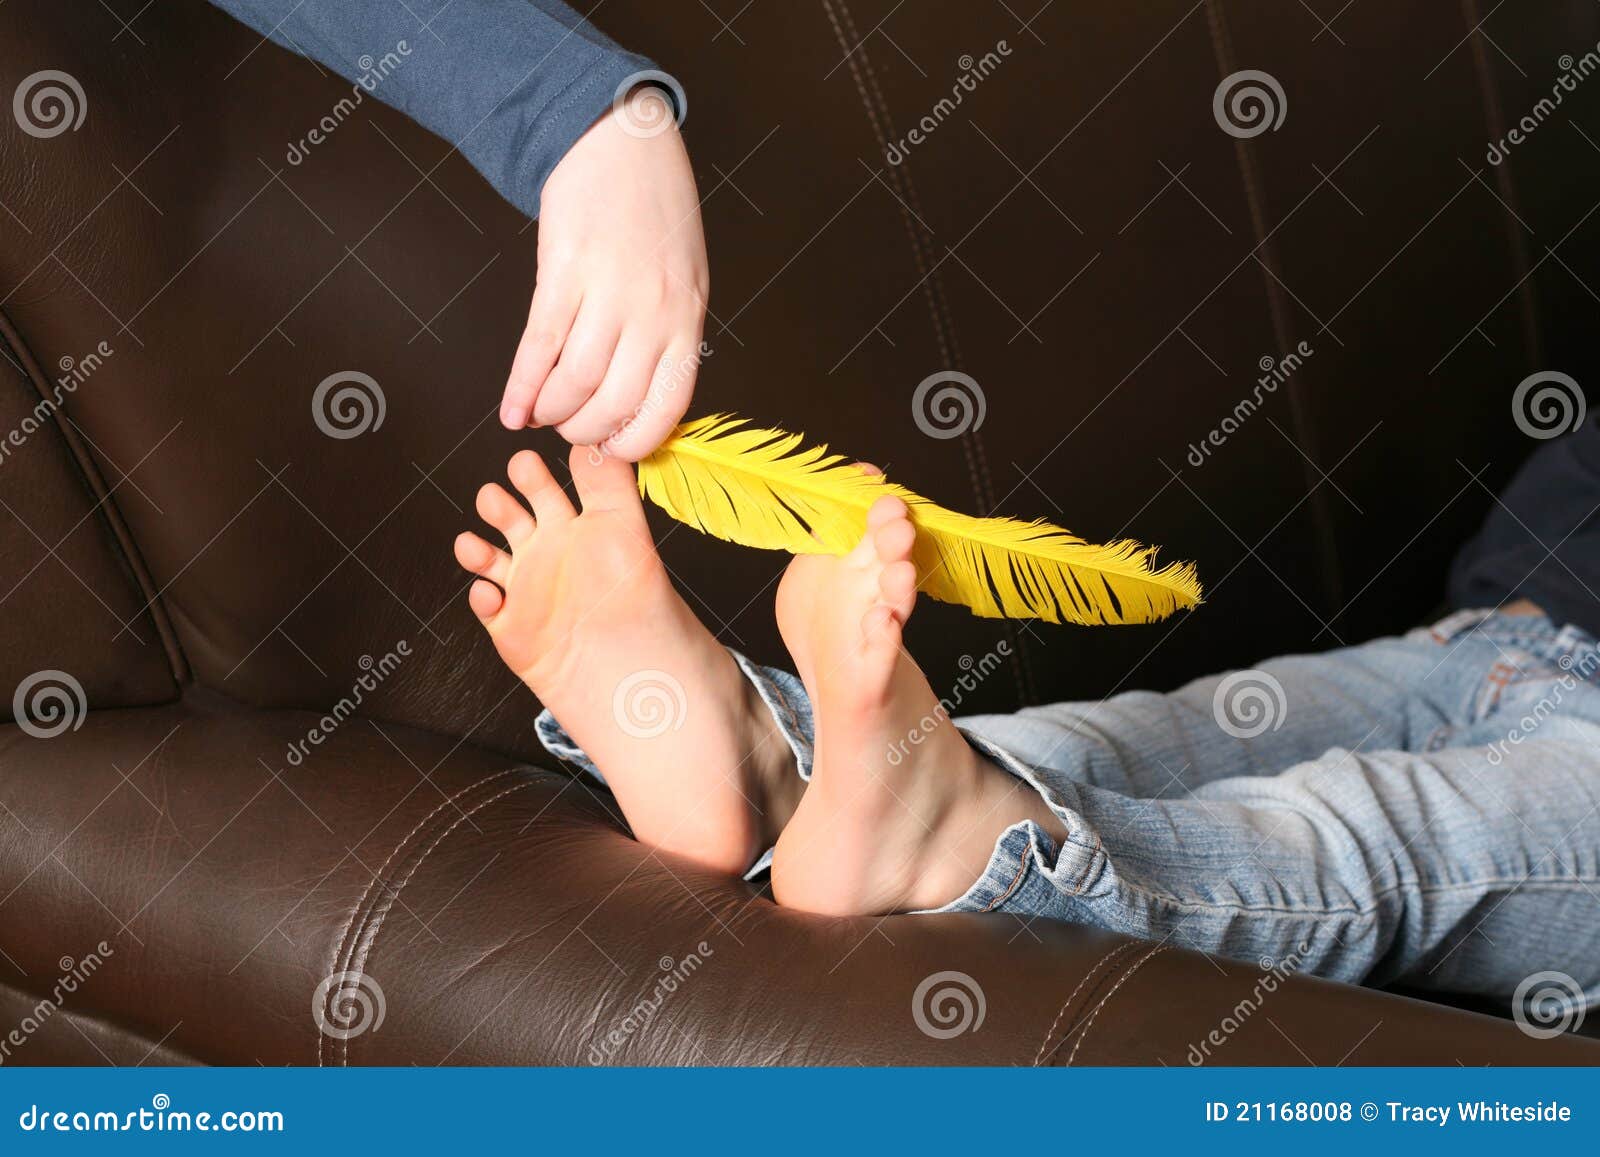 Videos feet tickle Tickle Touch